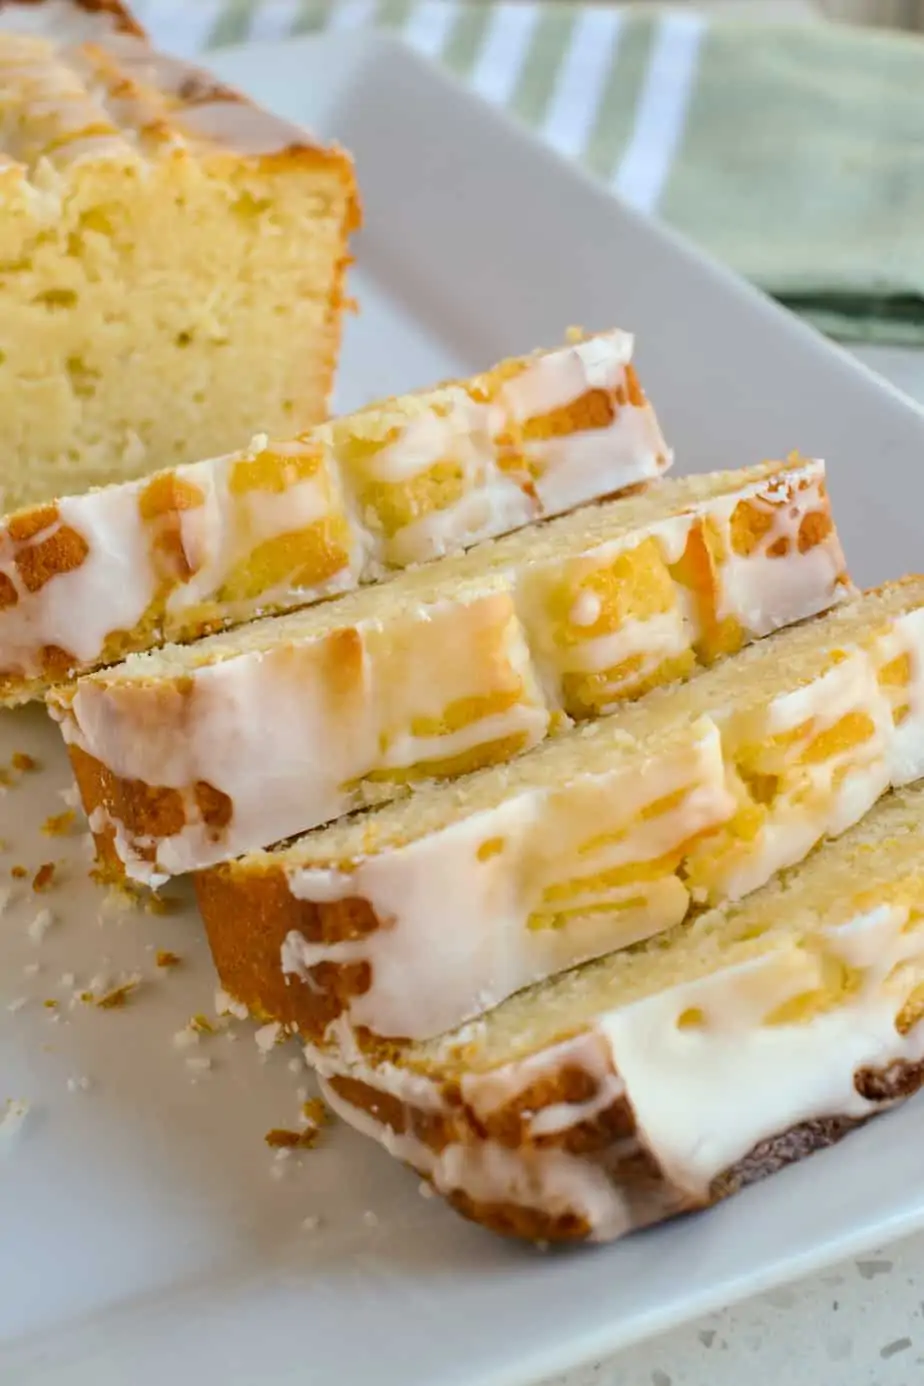 Slices of lemon glazed pound cake on a platter. 